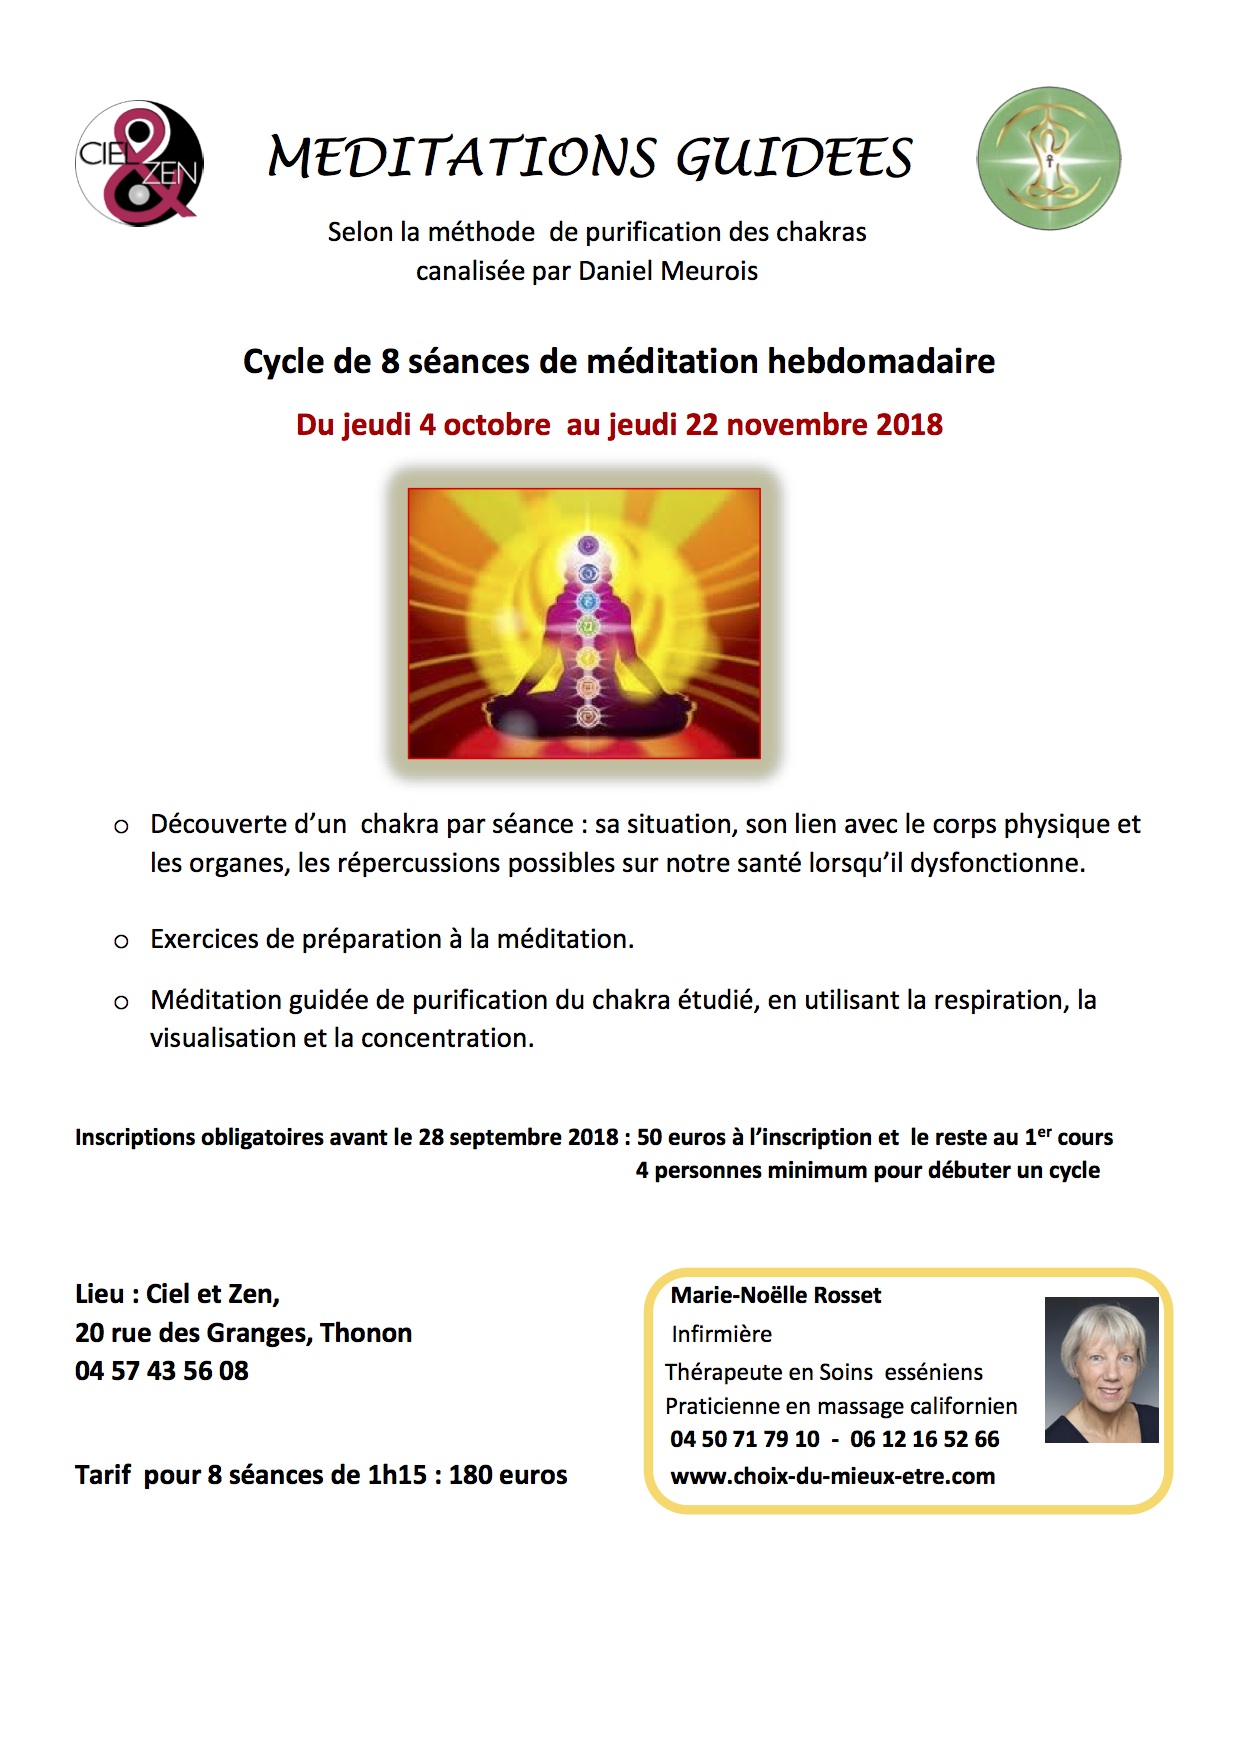 MEDITATIONS GUIDEES CYCLE 4